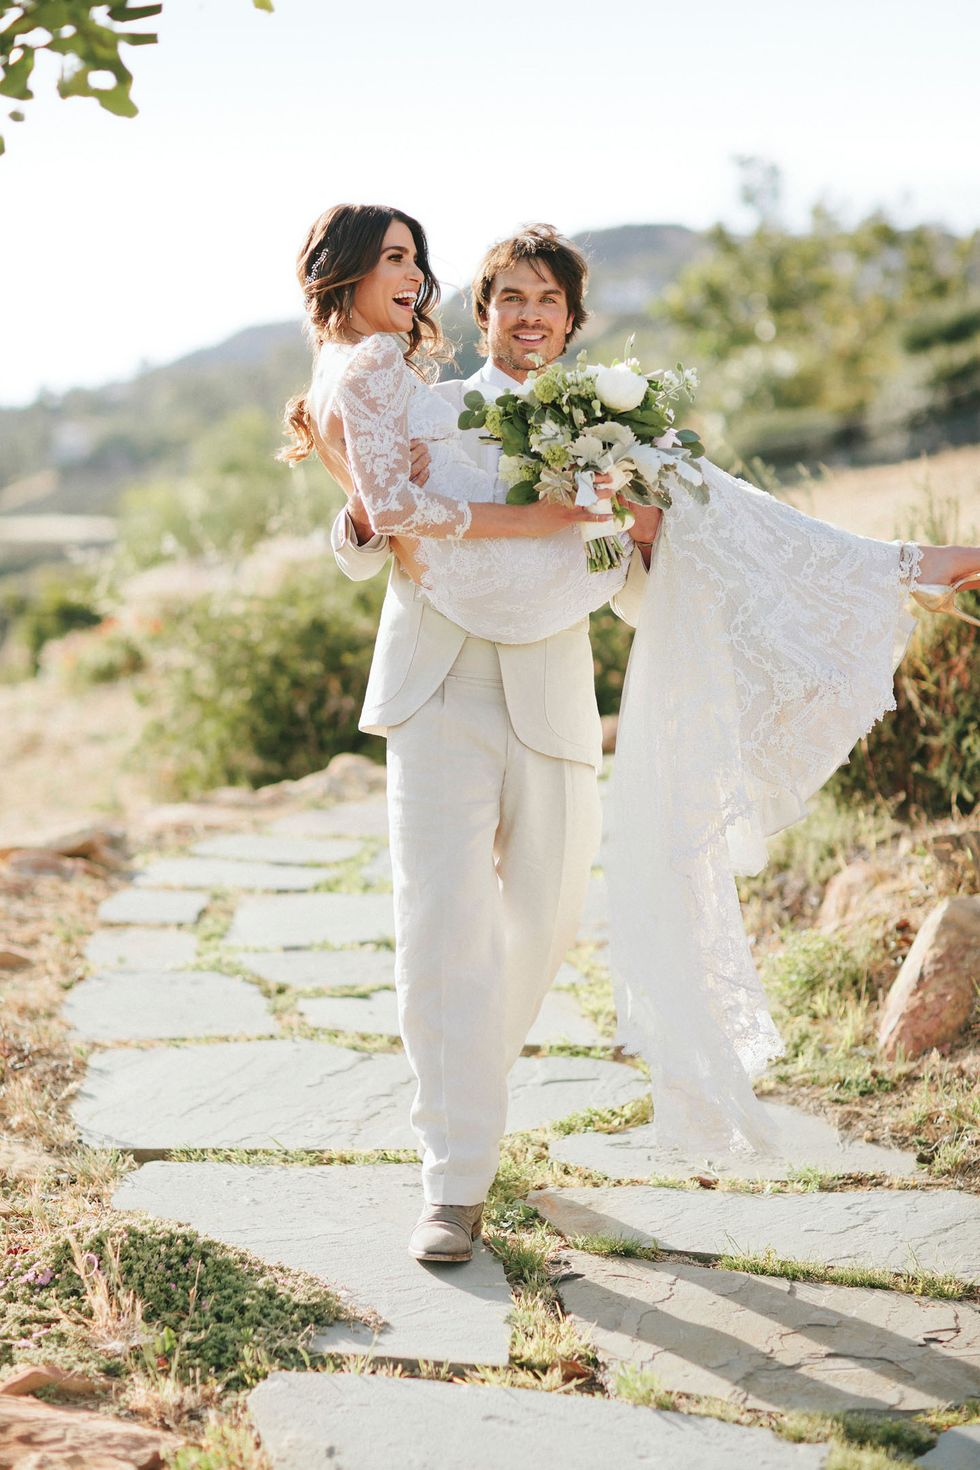 Nikki Reed and Ian Somerhalder wedding photos